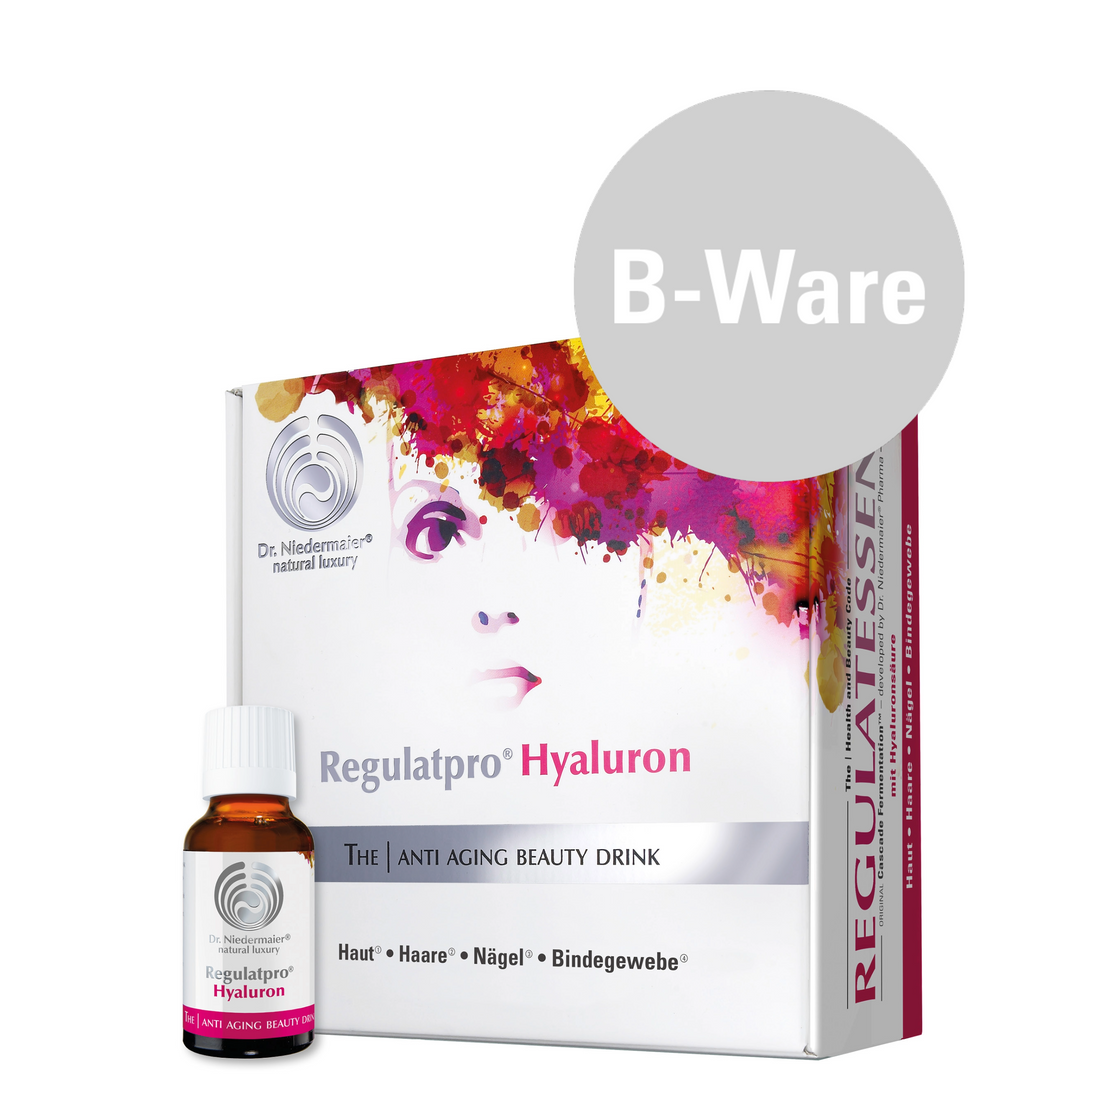 B-Ware Regulatpro® Hyaluron Drink